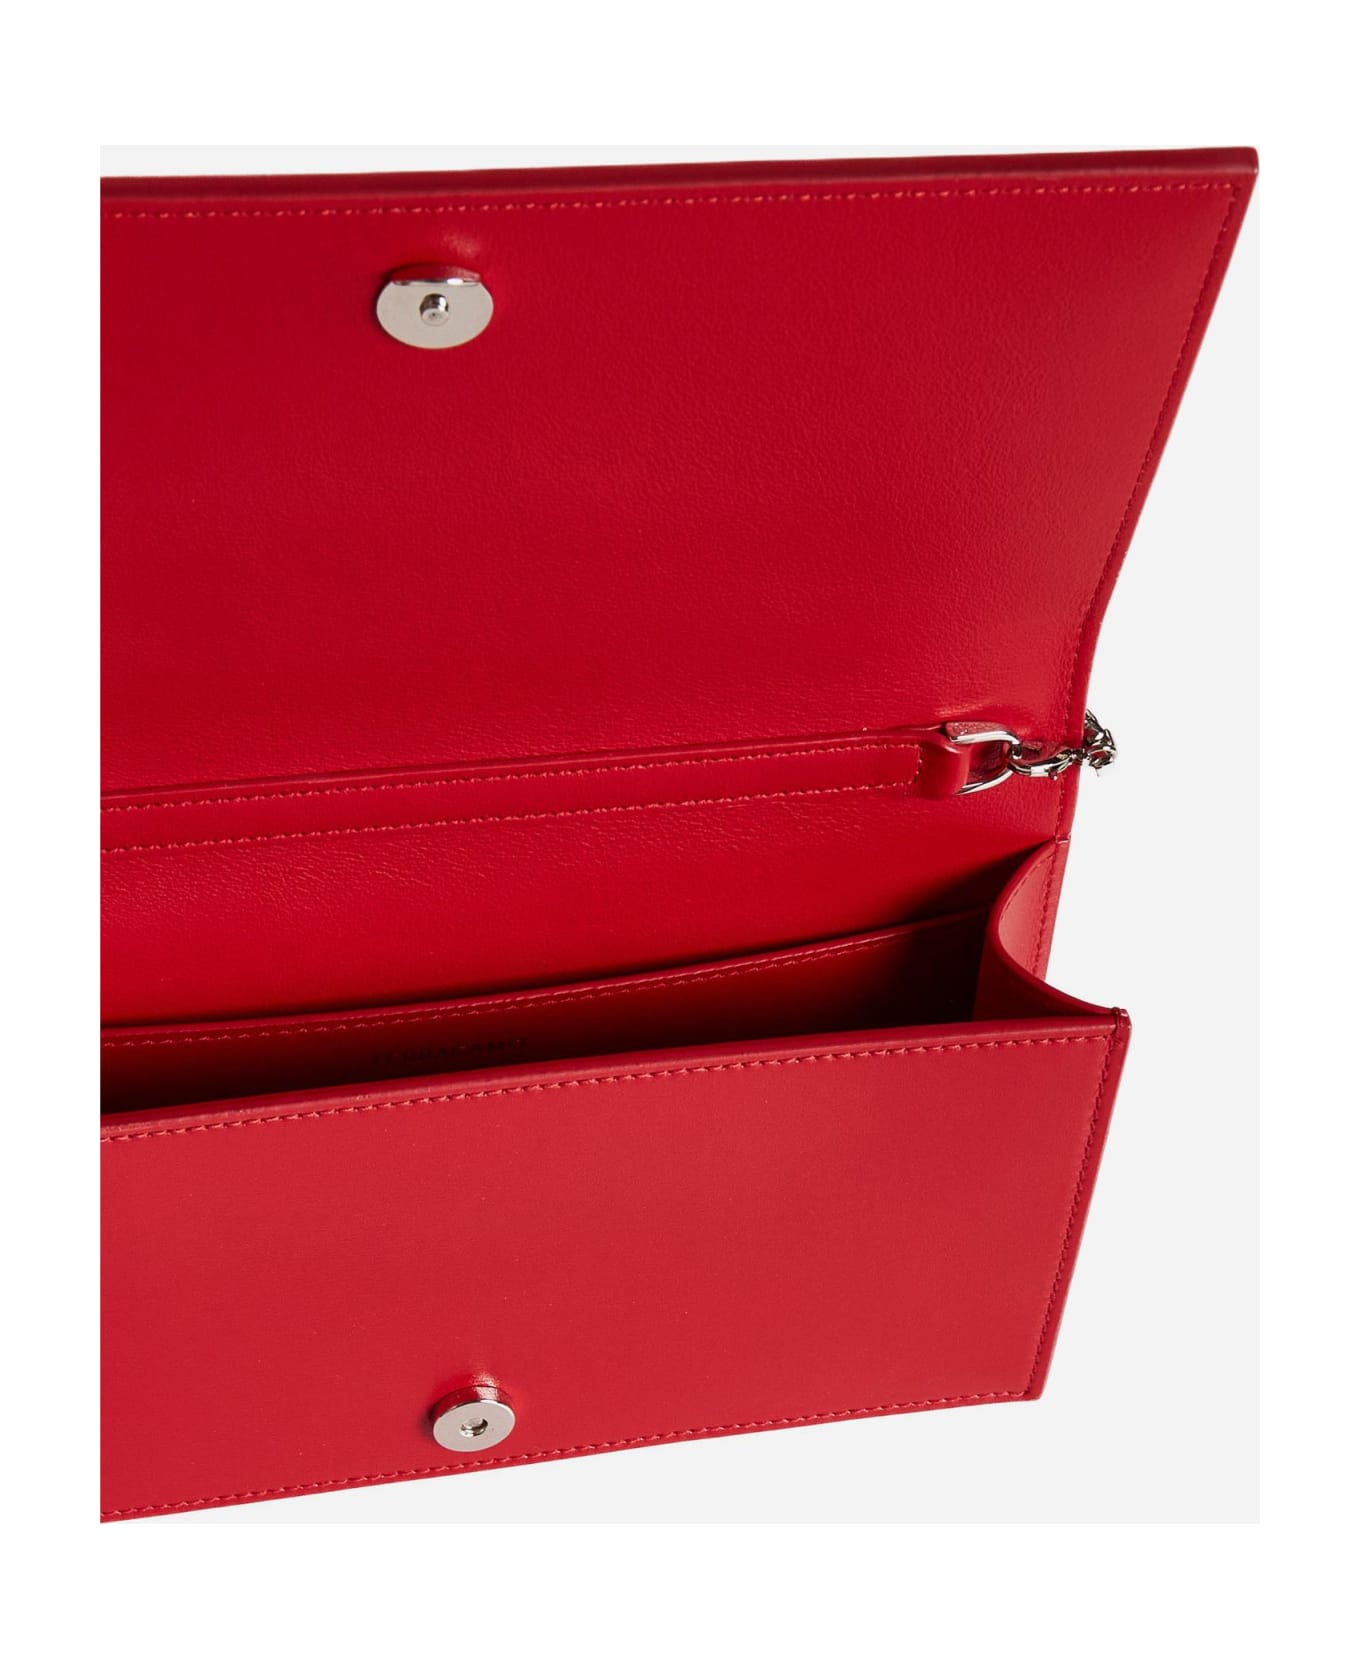 Ferragamo Gancini Leather Mini Bag - Flame red || flame red トートバッグ